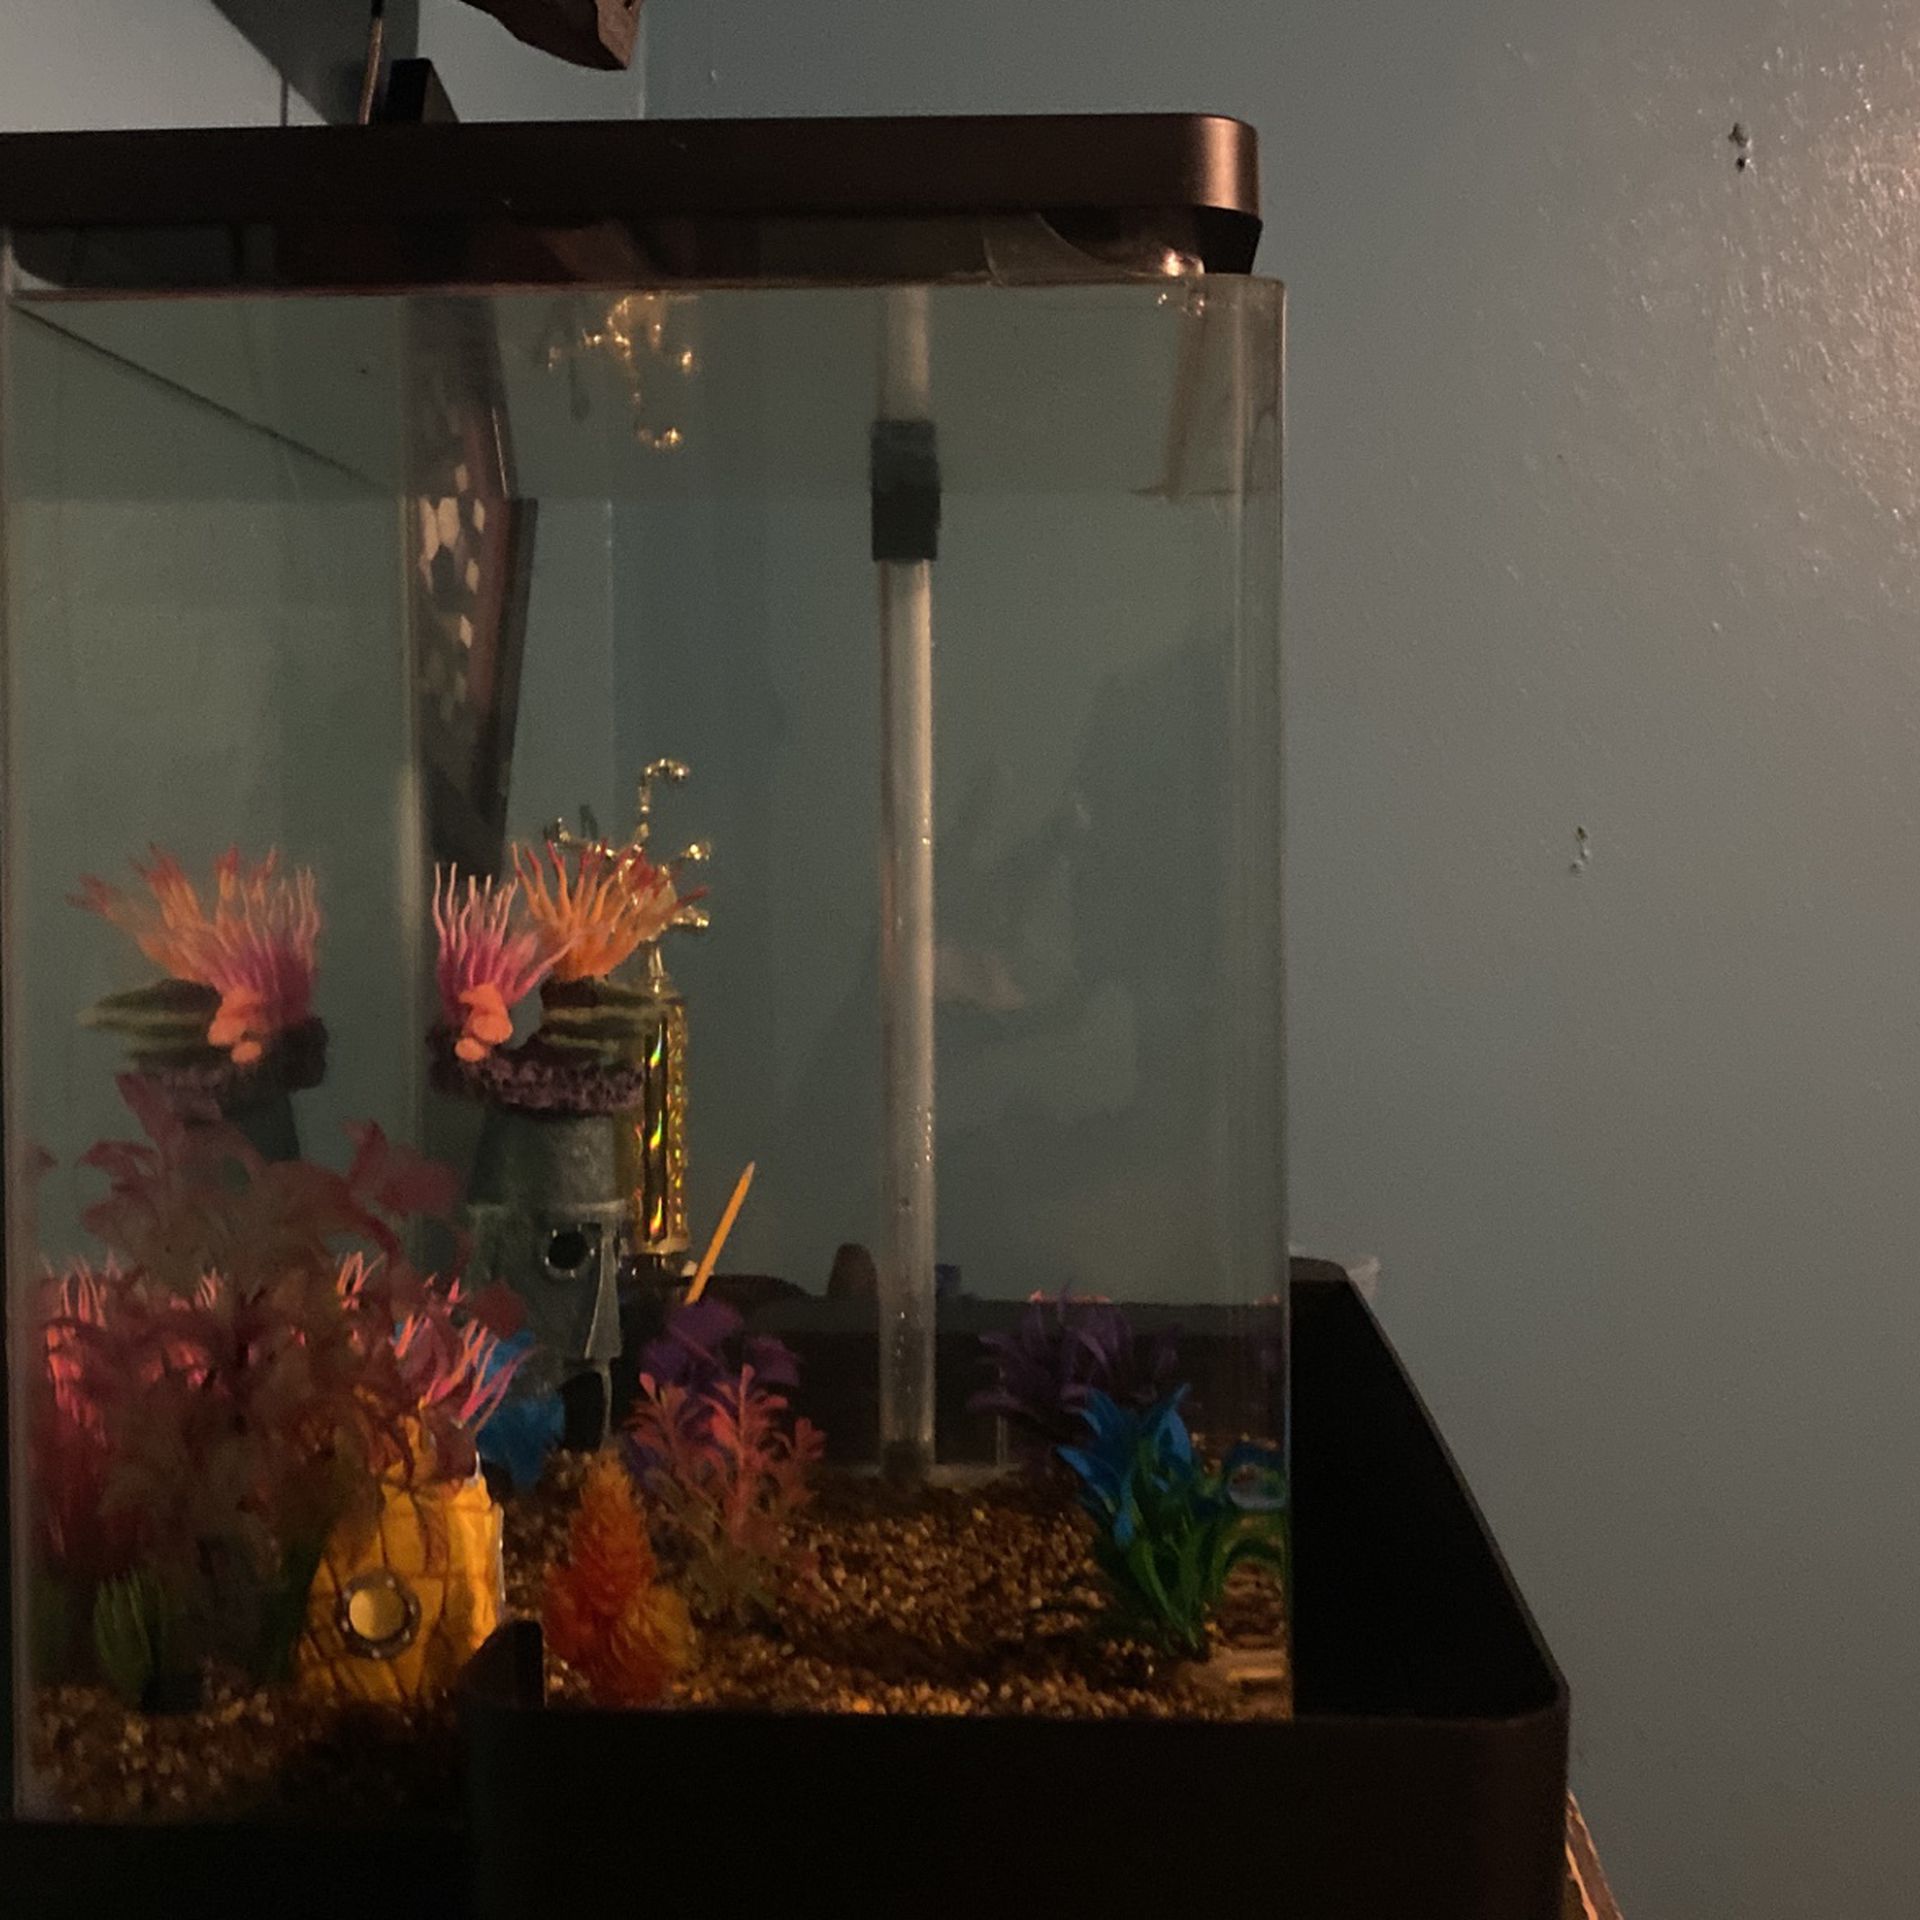 Fish  tank